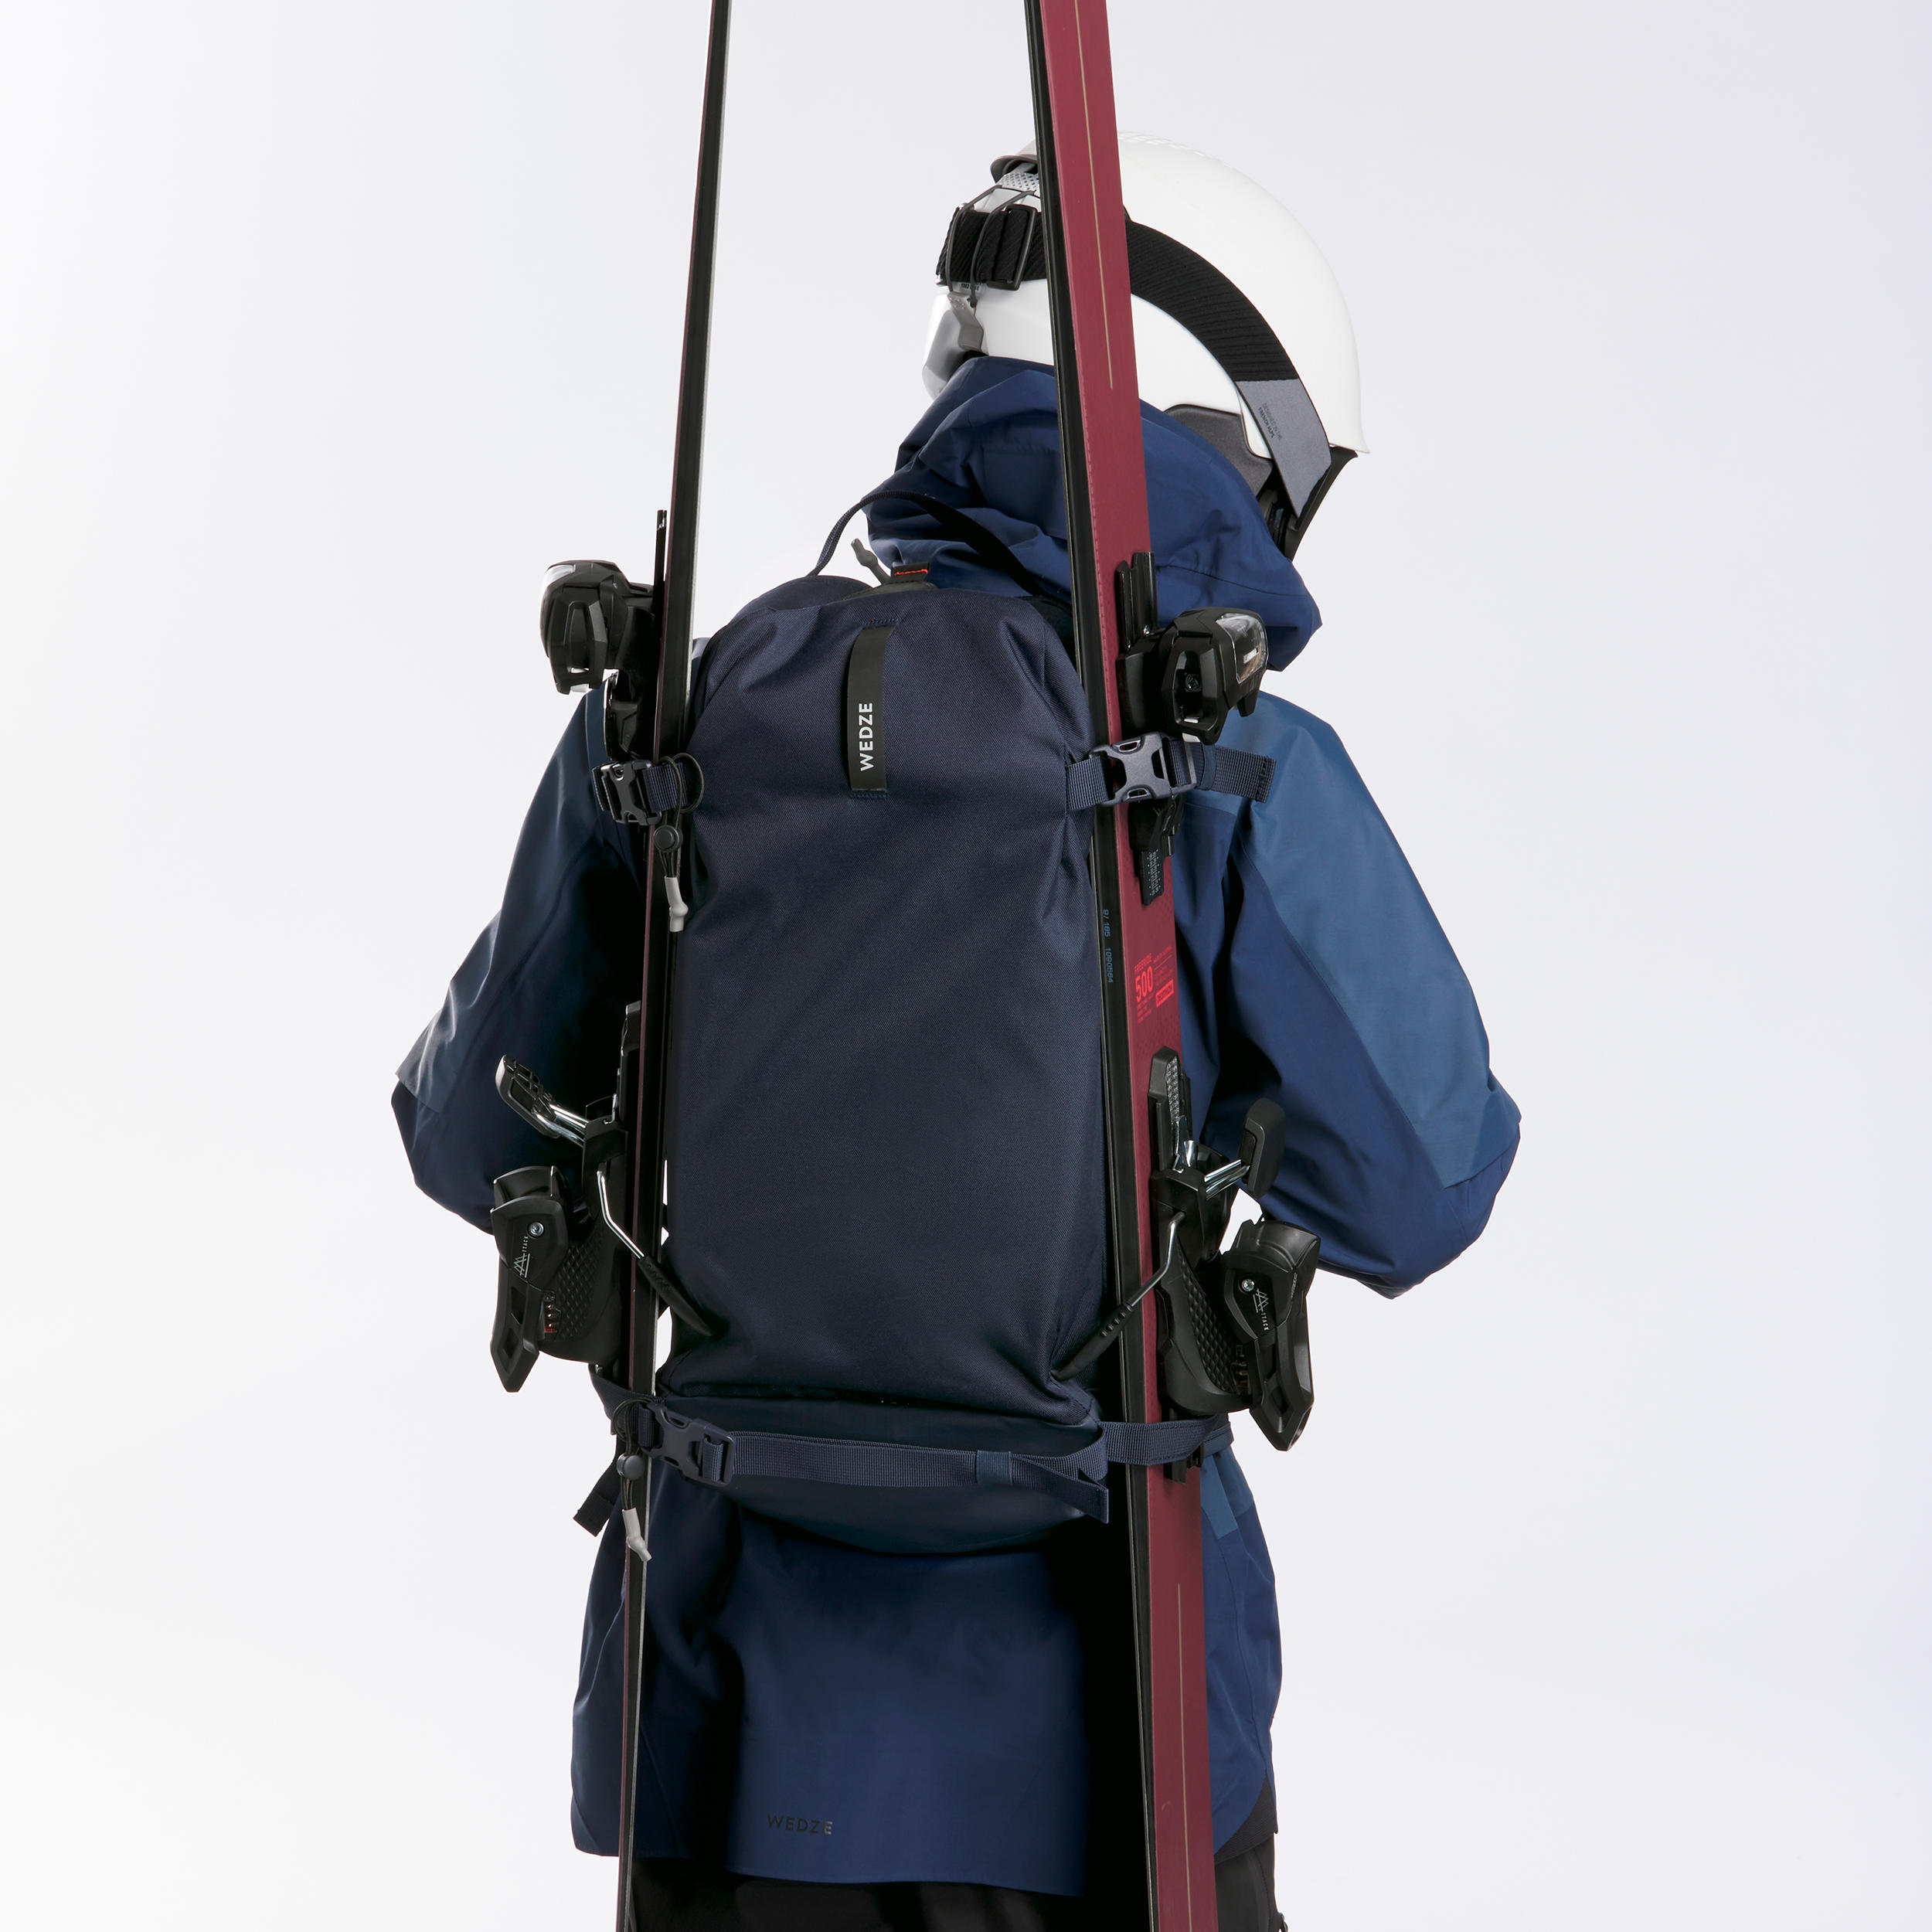 Freeride ski snowboard backpack - FR 100 DEFENSE - Navy Blue 4/23